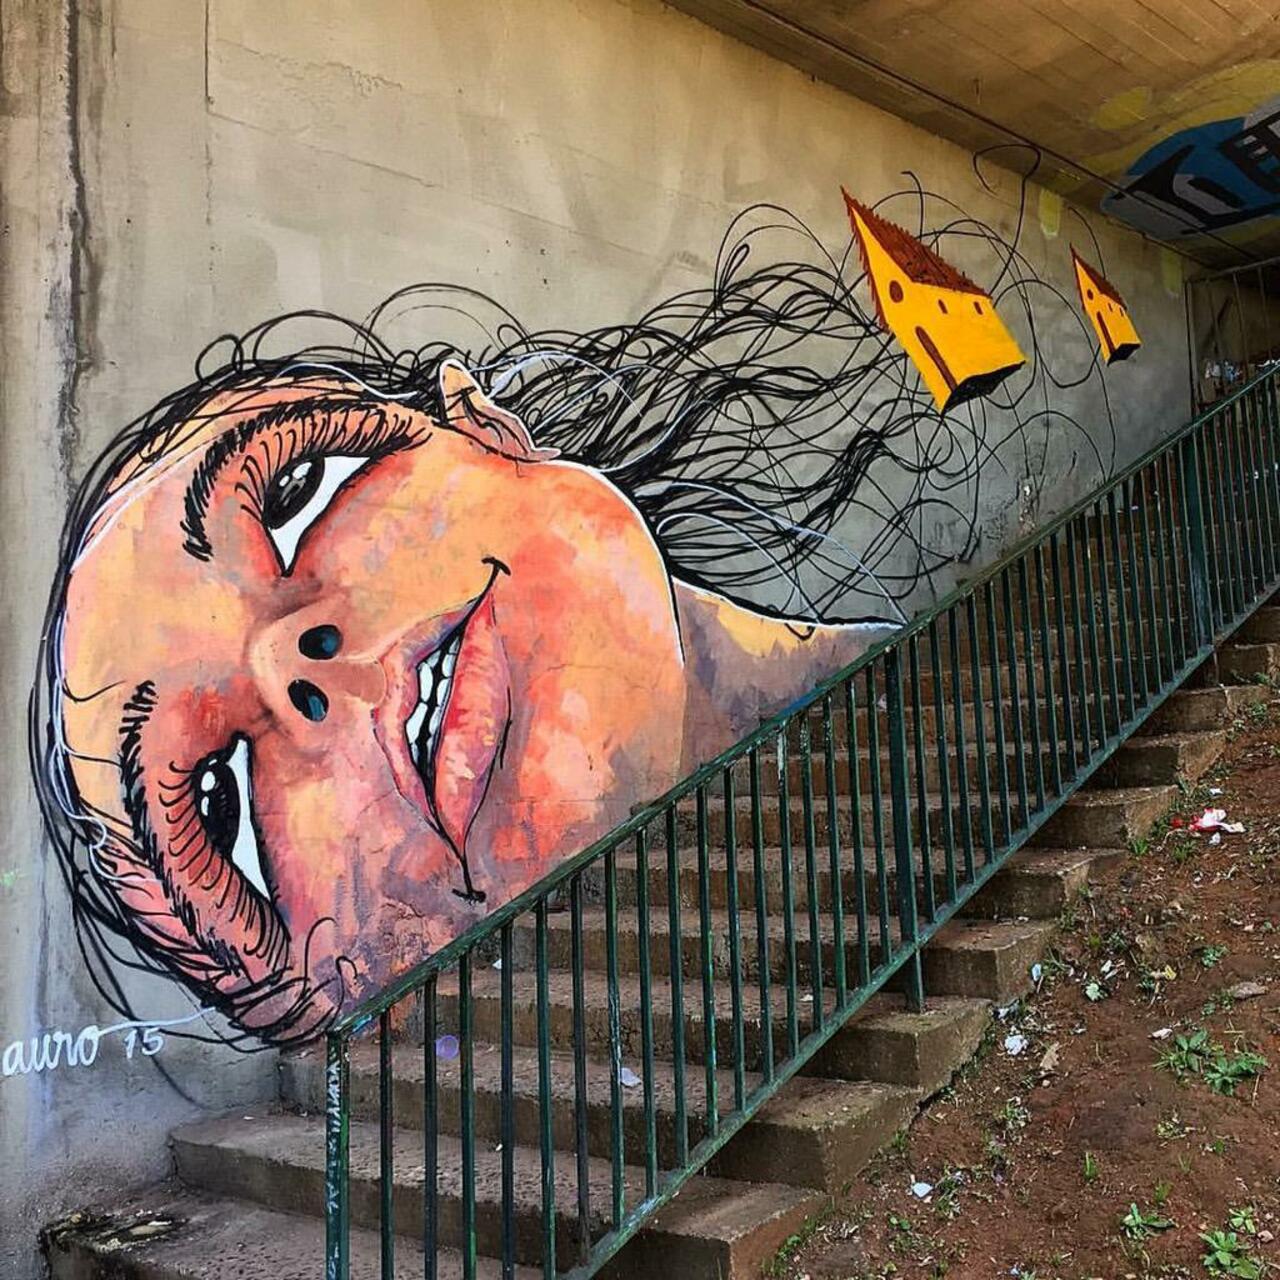 Street Art by Reveracidade in São Paulo 

#art #graffiti #mural #streetart http://t.co/mo0RJjGF4A